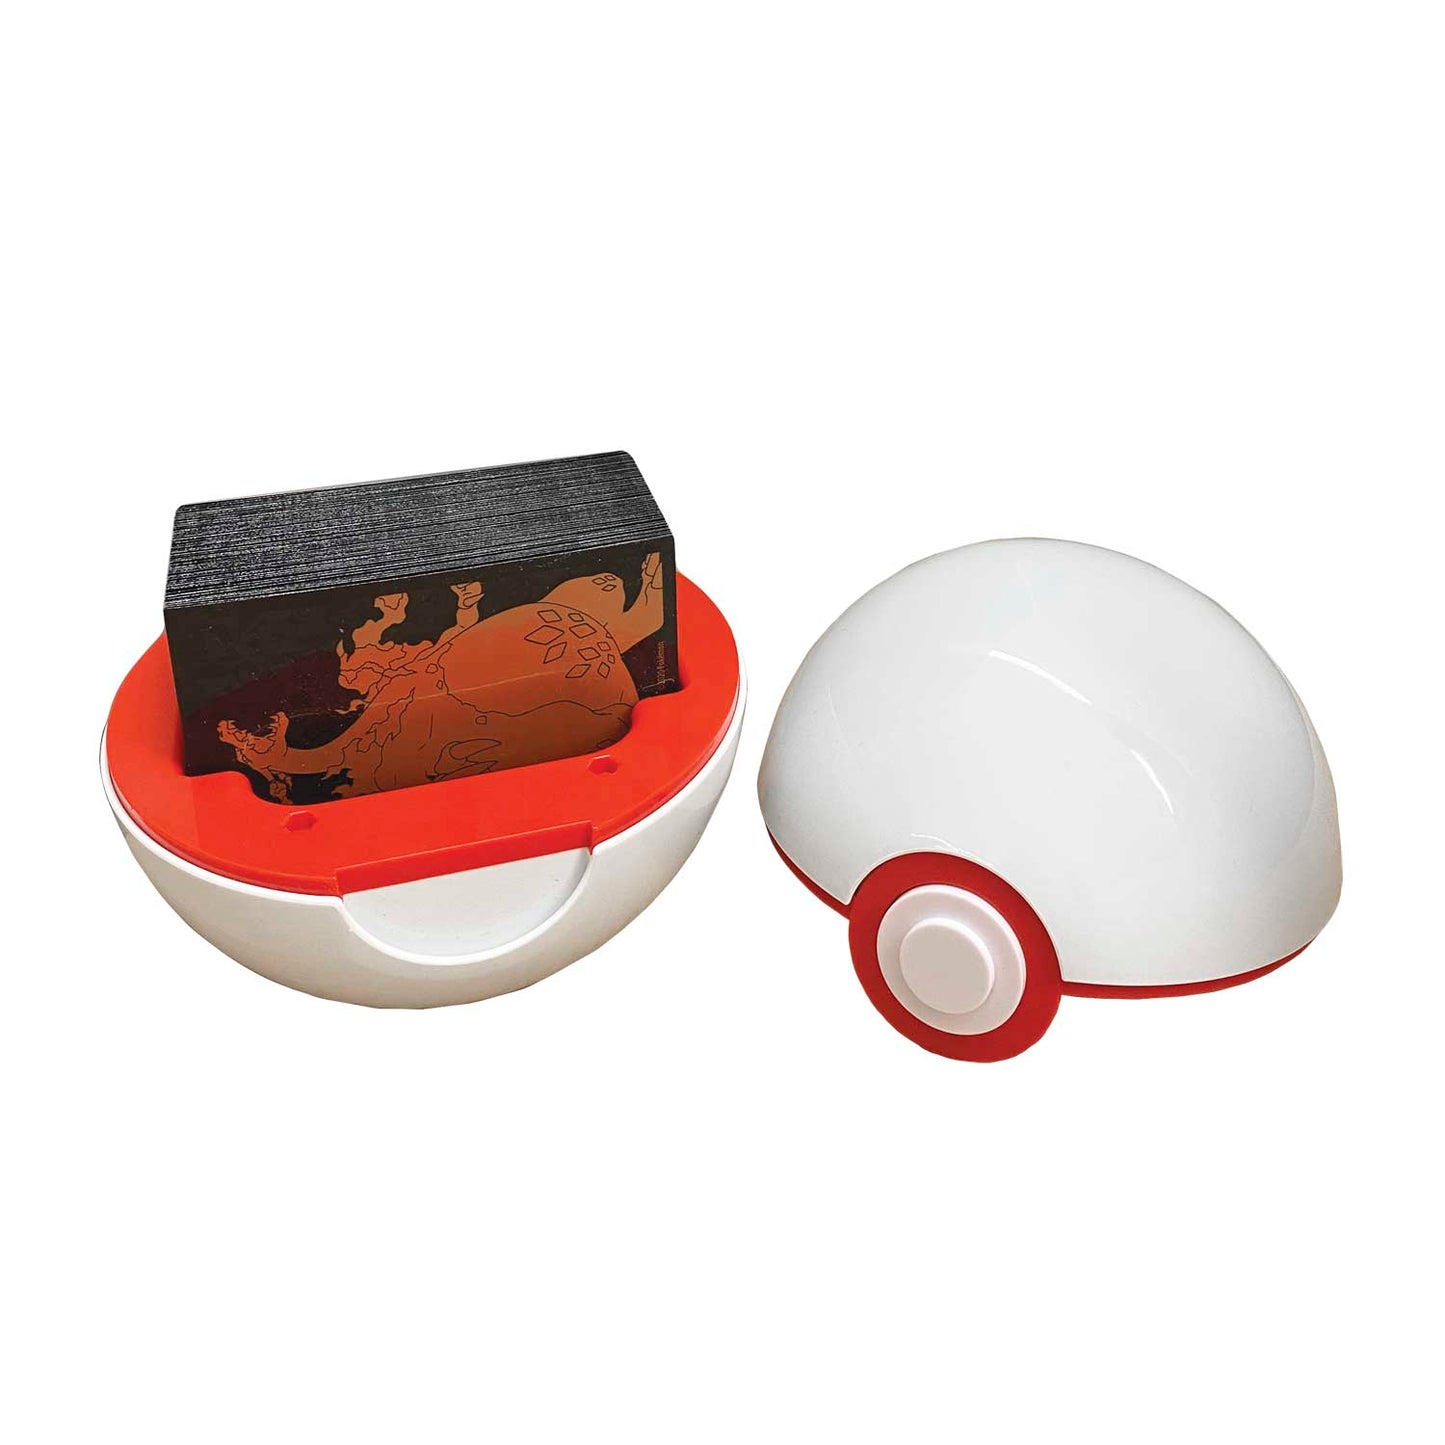 Pokémon - Pokémon GO, Premier Deck Holder Collection (Dragonite VSTAR)